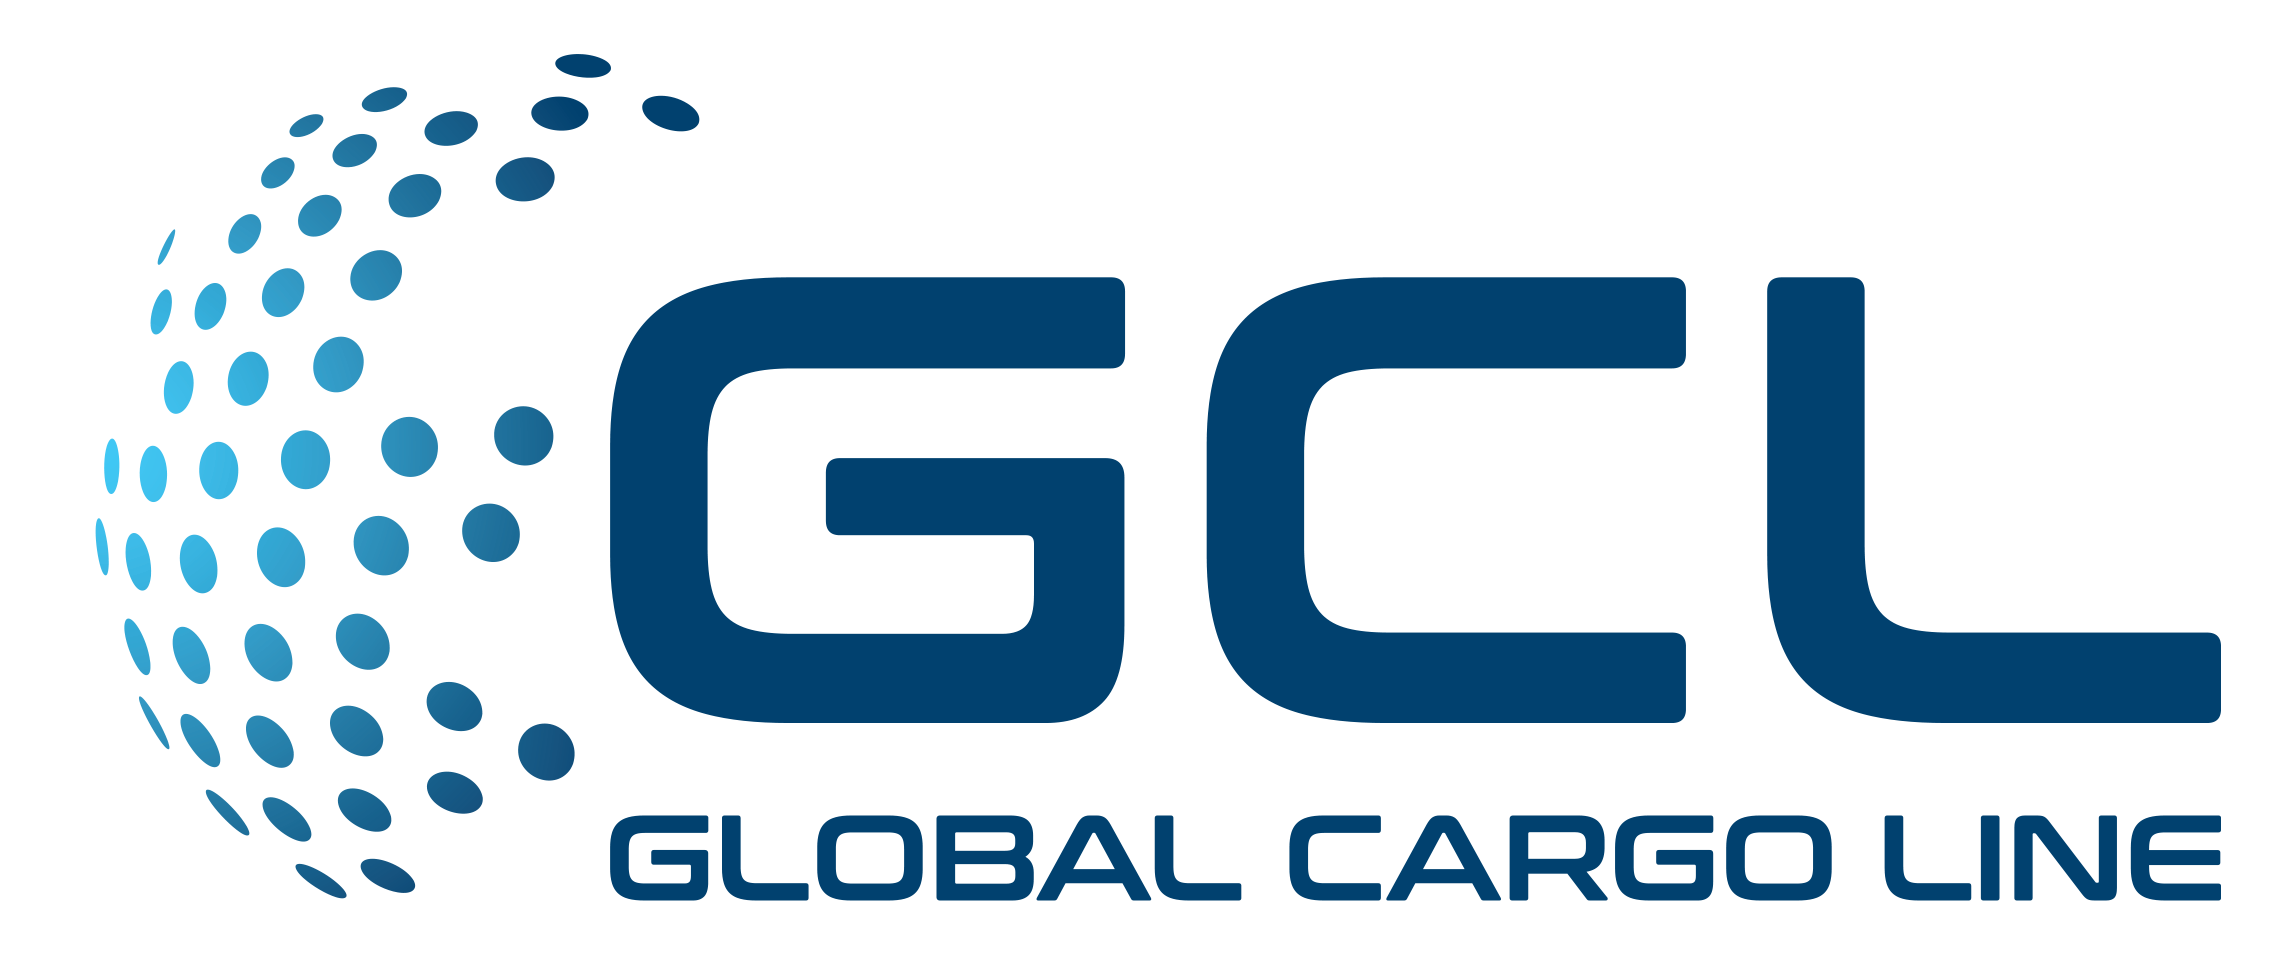 Global Cargo Line